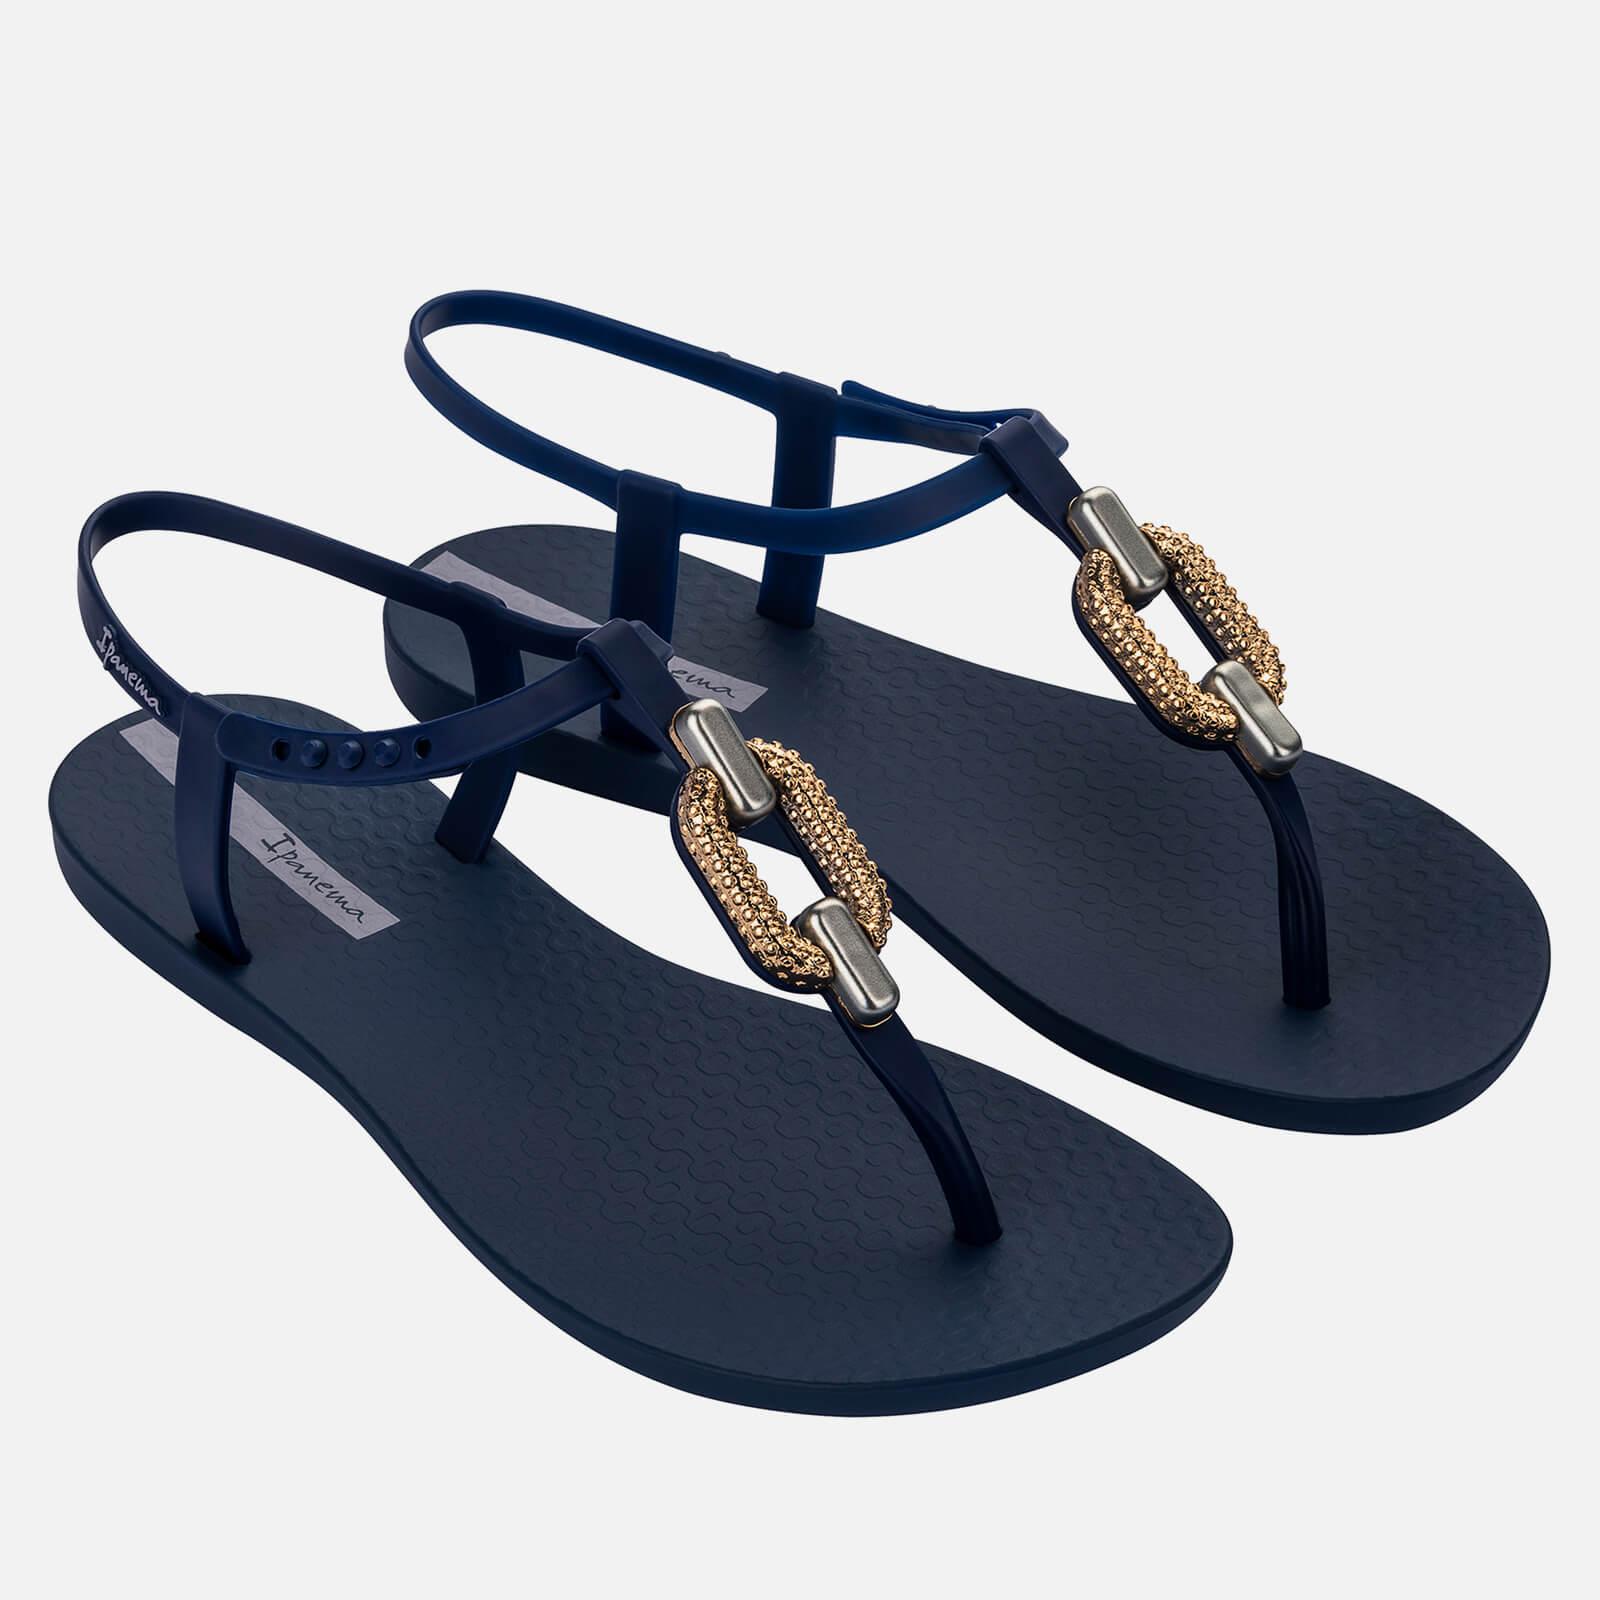 Buy Ipanema Sandals FOIL Online India | Ubuy